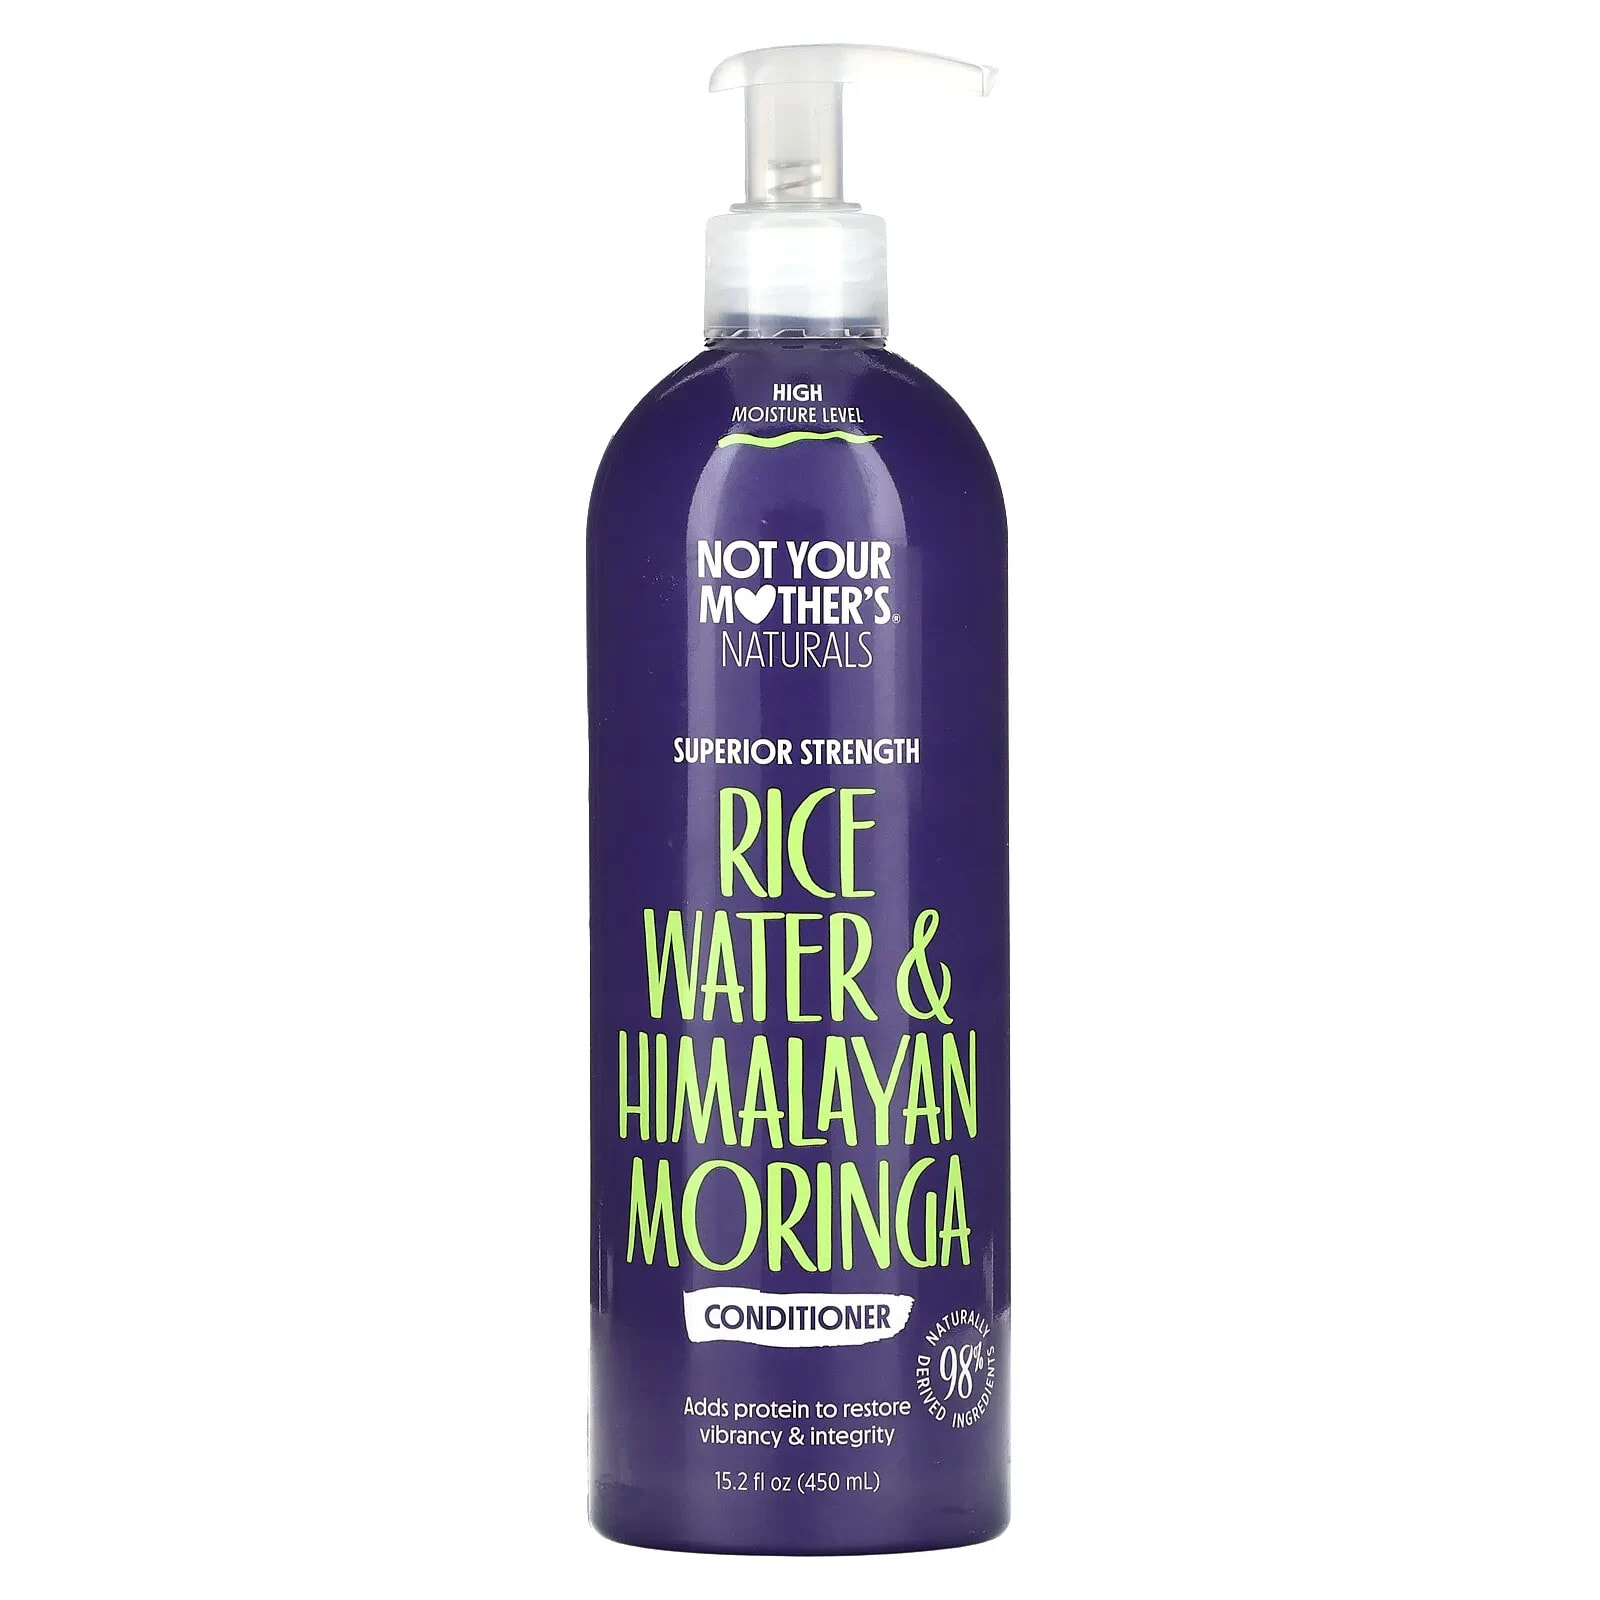 Rice Water & Himalayan Moringa Conditioner, 15.2 fl oz (450 ml)